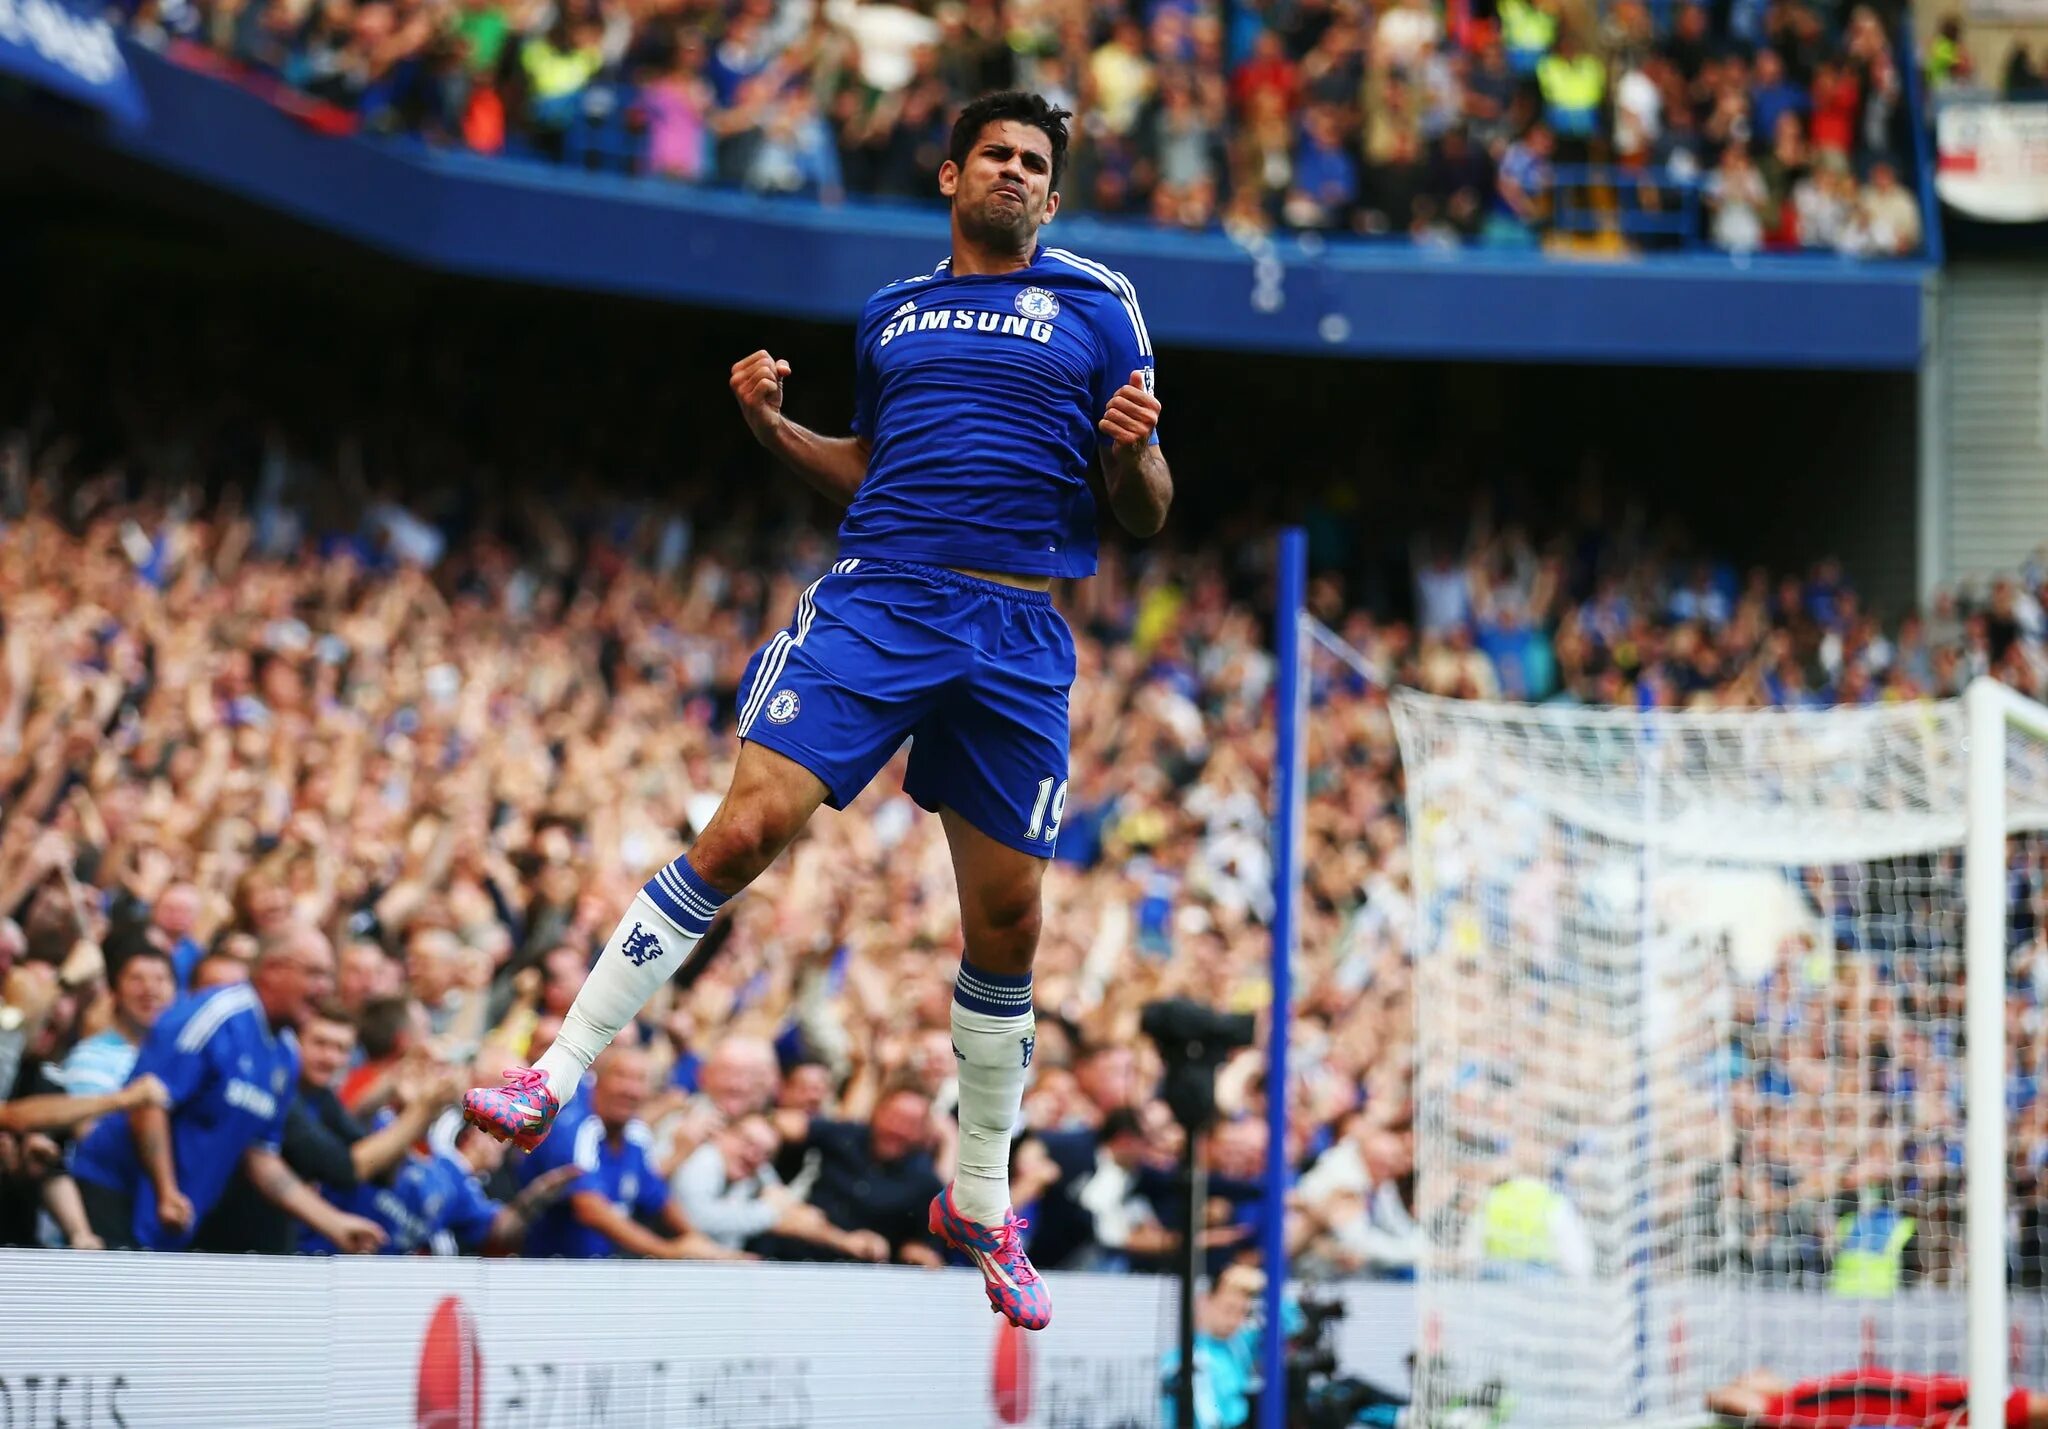 He scored 2. Diego Costa Chelsea.